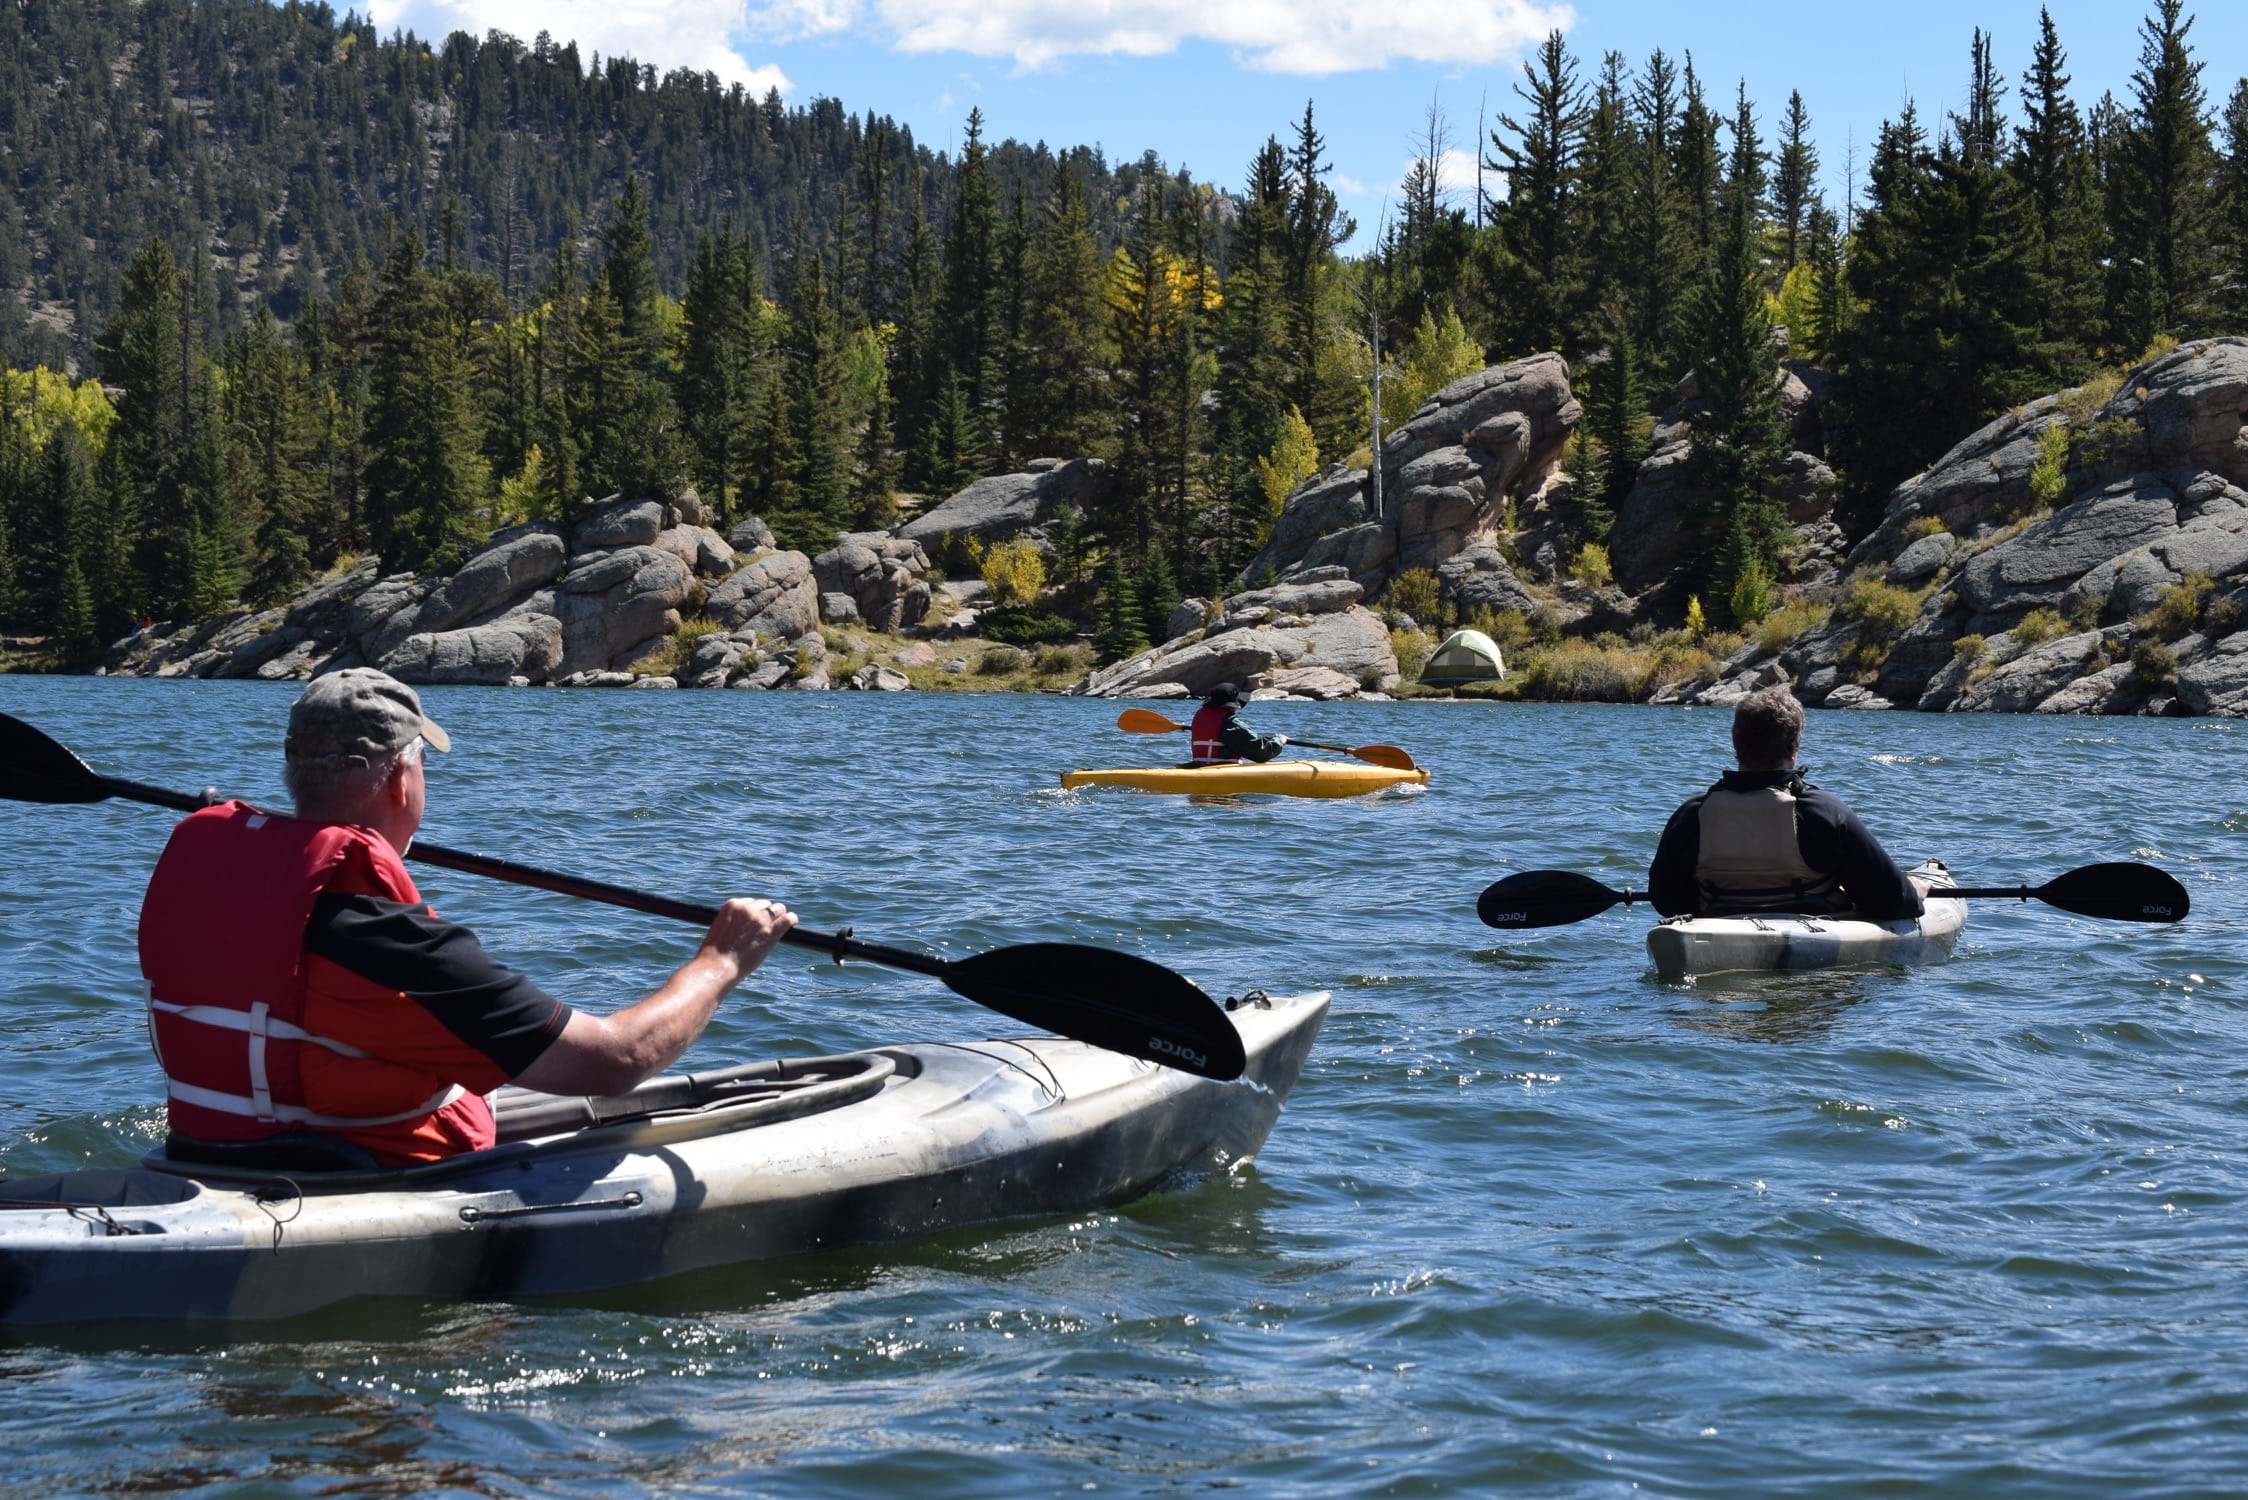 Kayakers on a lake